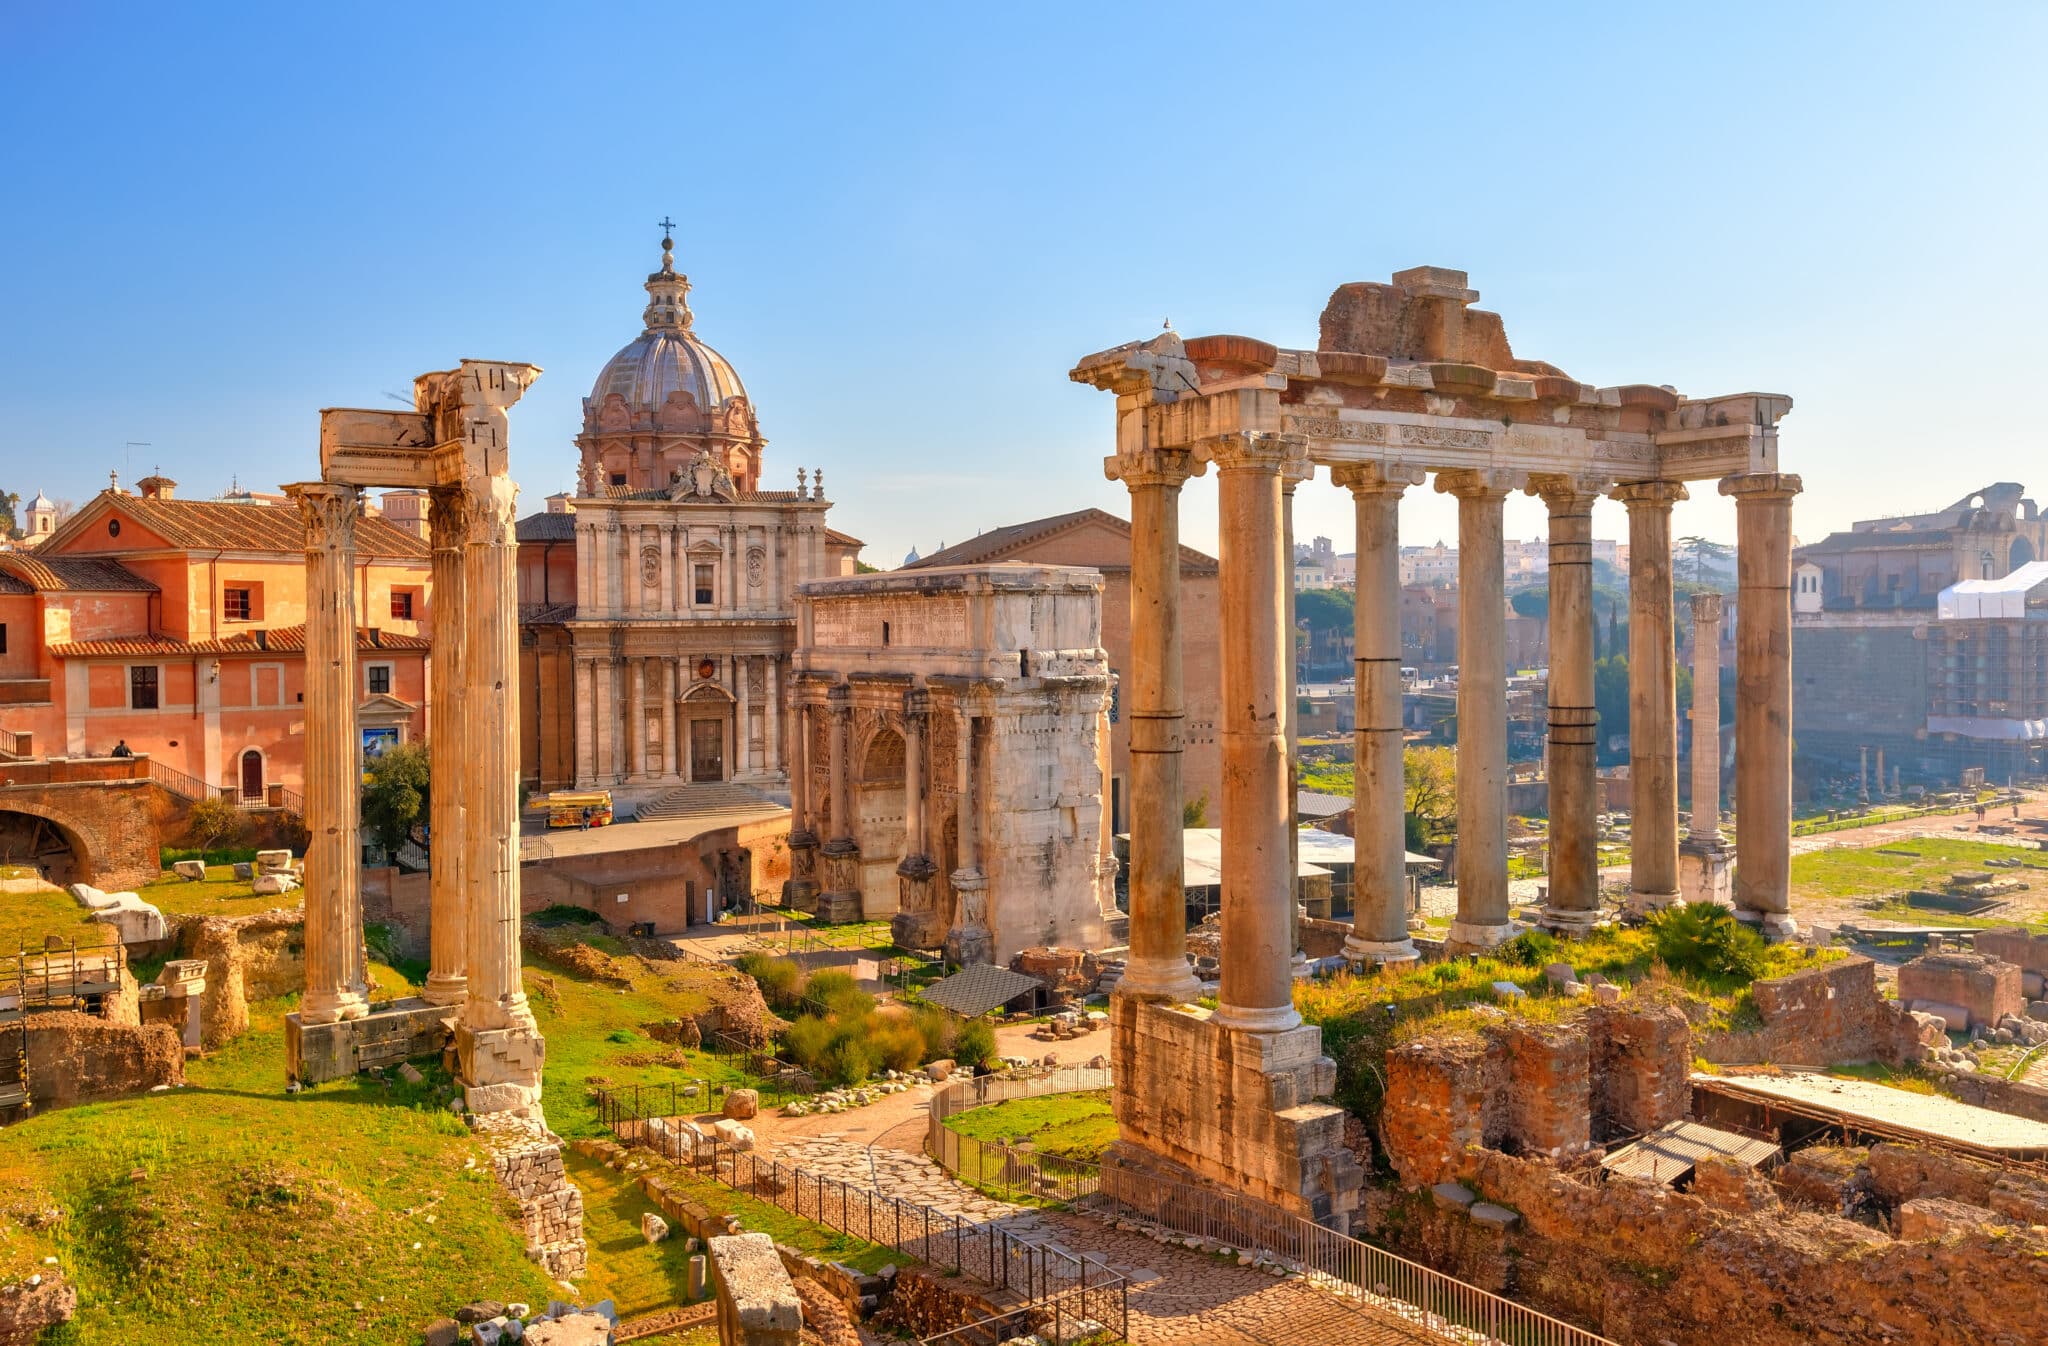 Forum Romain à Rome